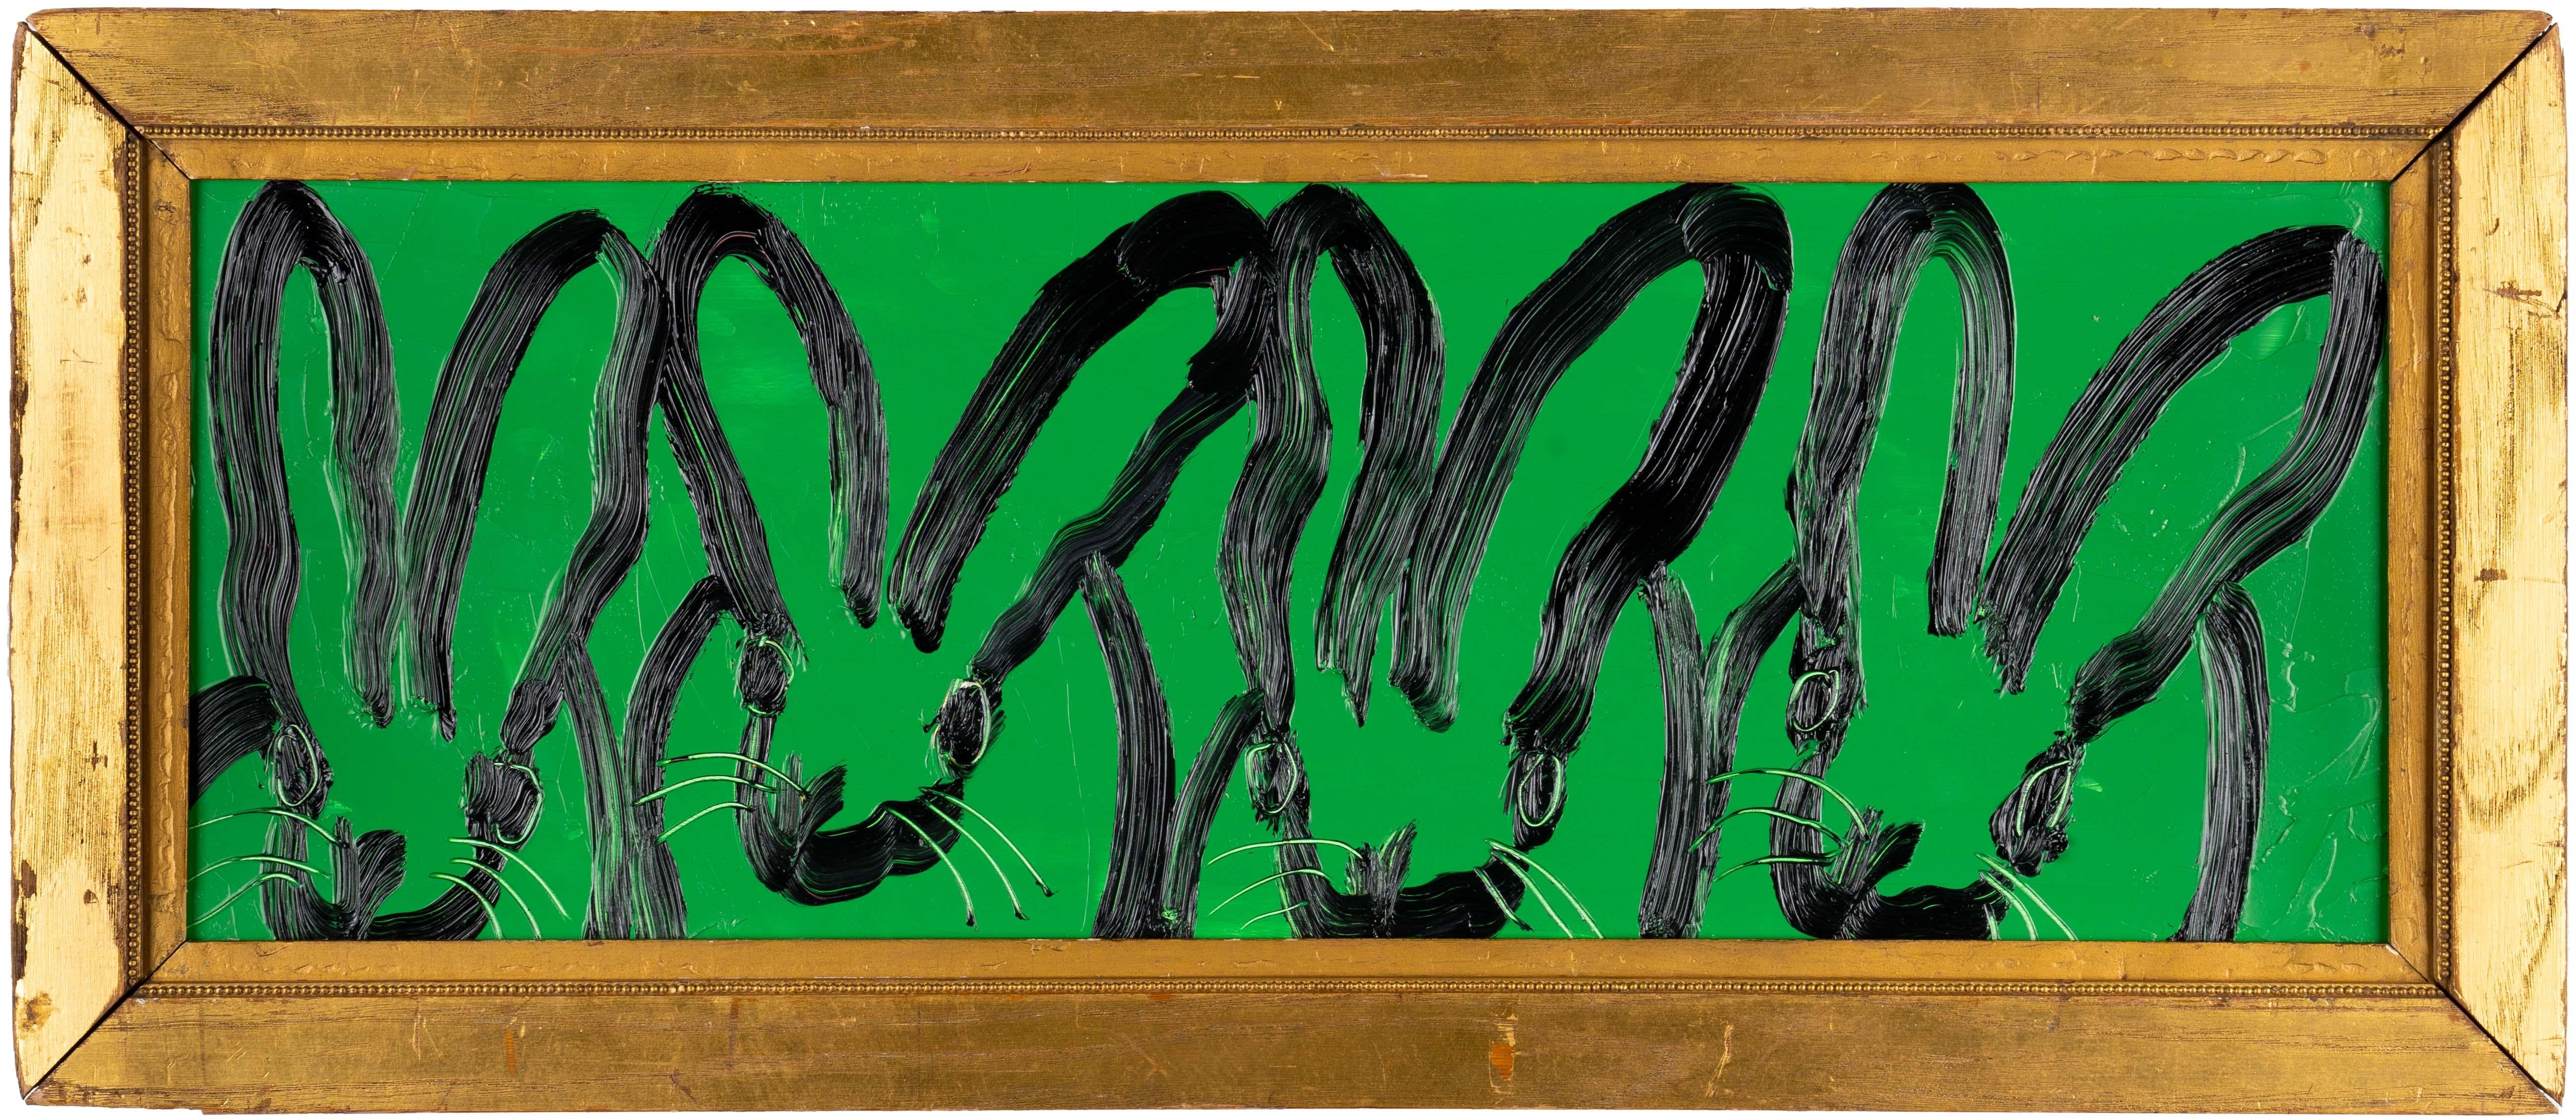 Hunt Slonem "UNTITLED" Bunnies on Green
Four black gestured bunnies on a dark green background, framed in an antique golden wood frame.

Unframed: 9 x 25.5 inches
Framed: 12.5 x 29 inches
*Painting is framed - Please note Hunt Slonem paintings with